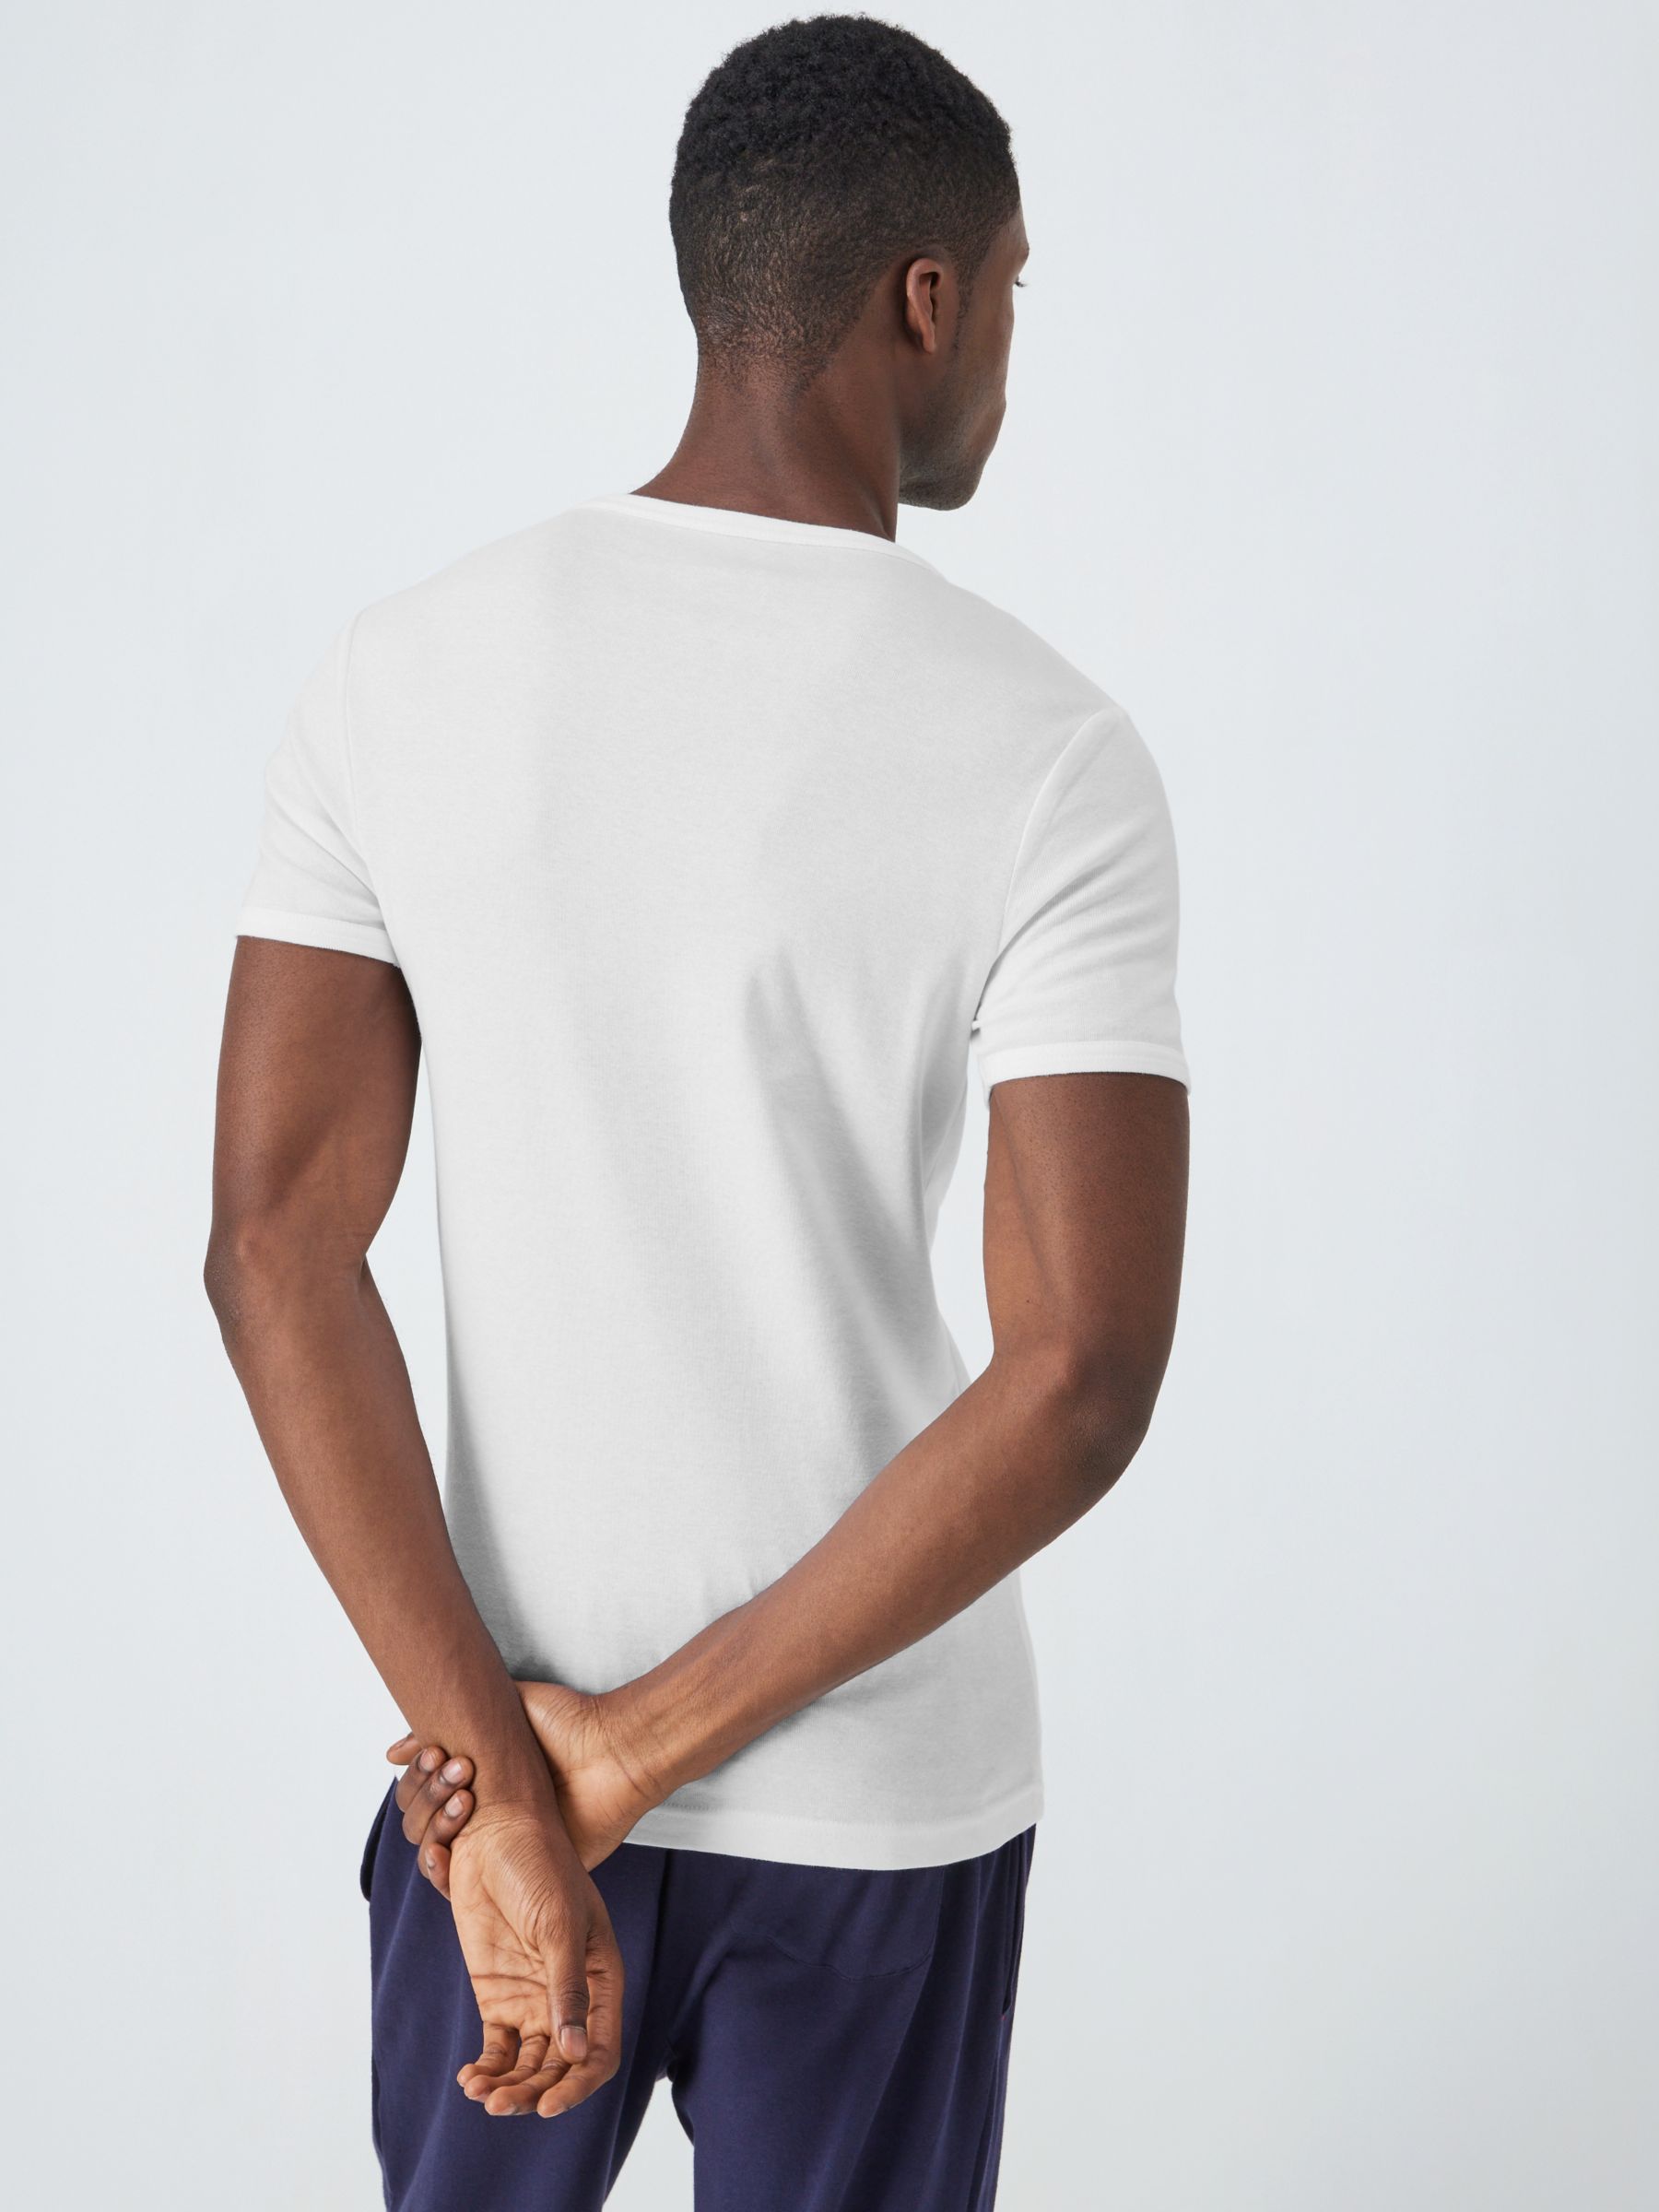 John Lewis Organic Cotton Short Sleeve Vest, Pack of 2, White, M